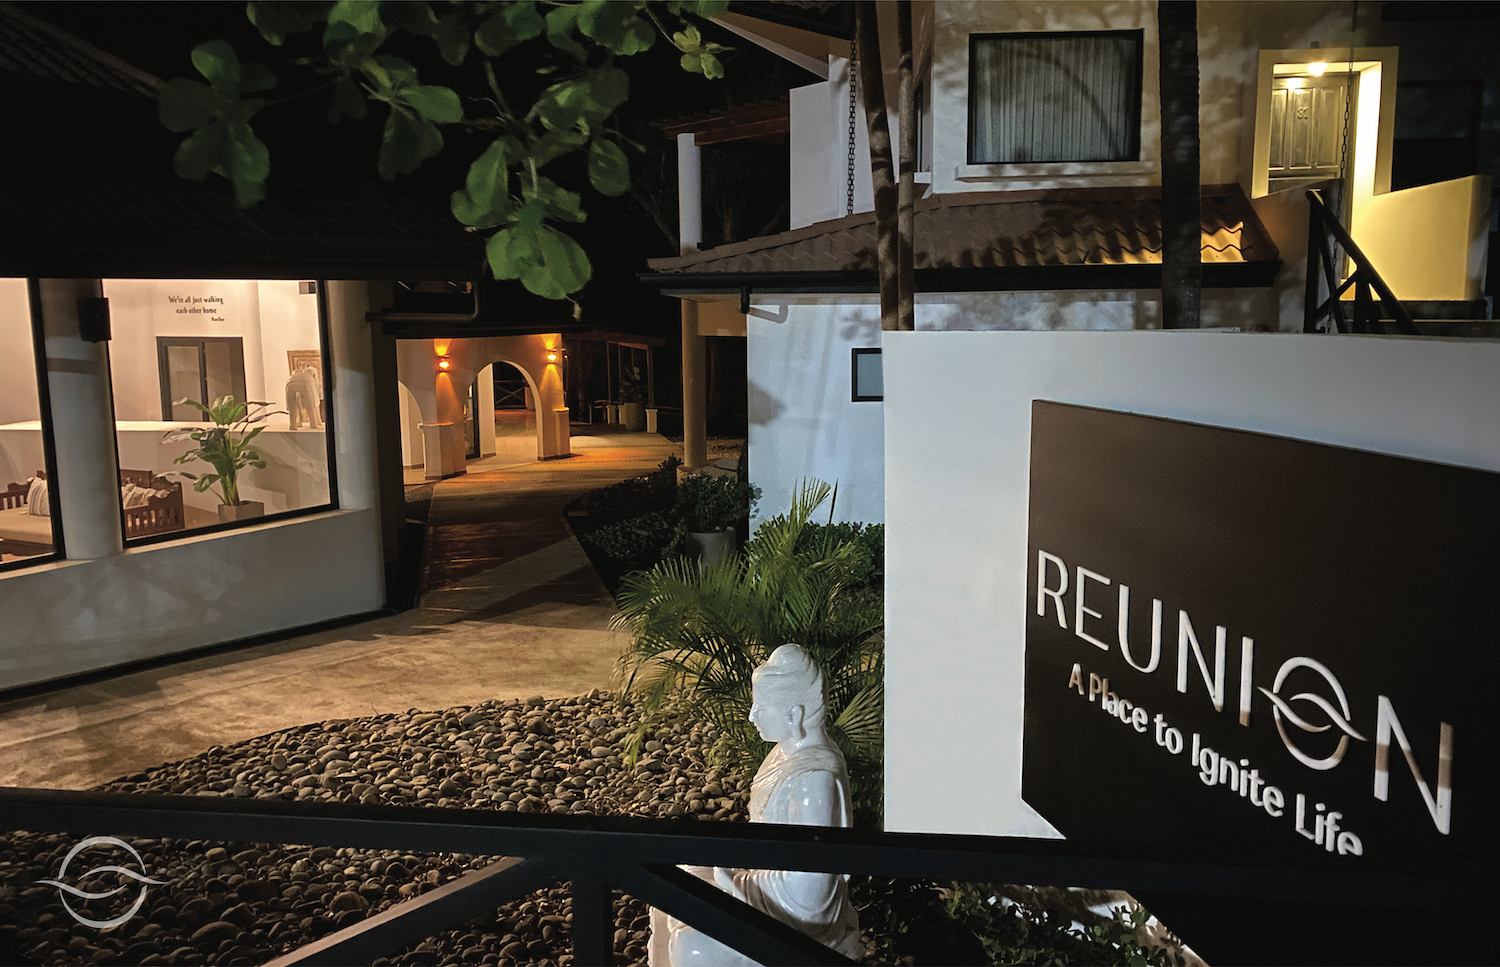 Reunion Costa Rica's lobby entrance.